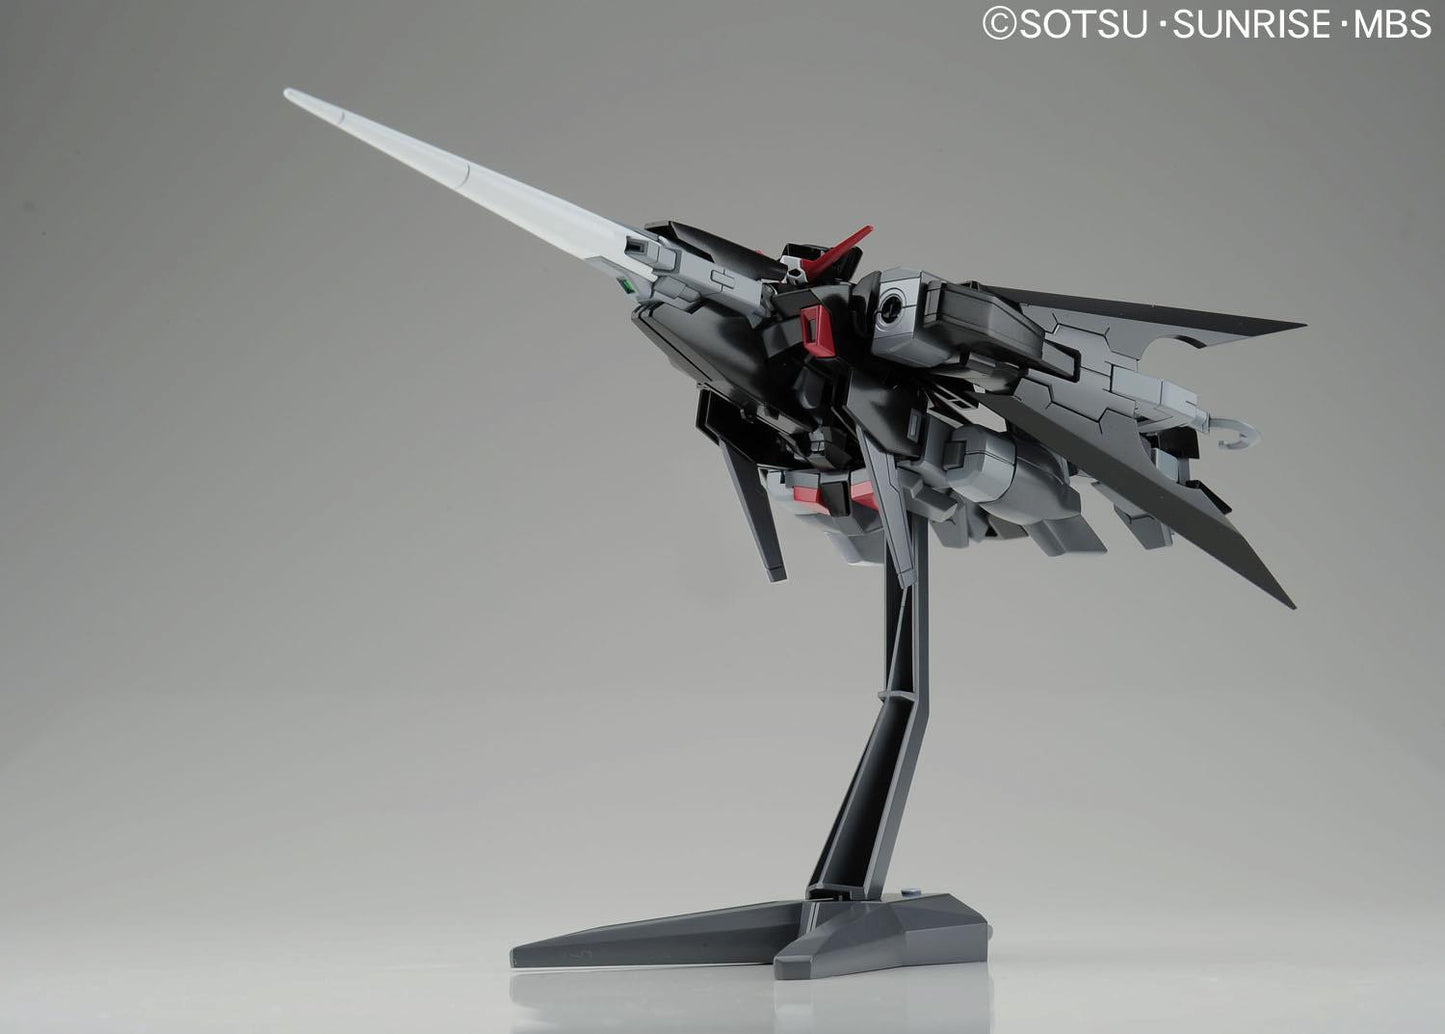 HG 1/144 Gundam AGE-2 Dark Hound